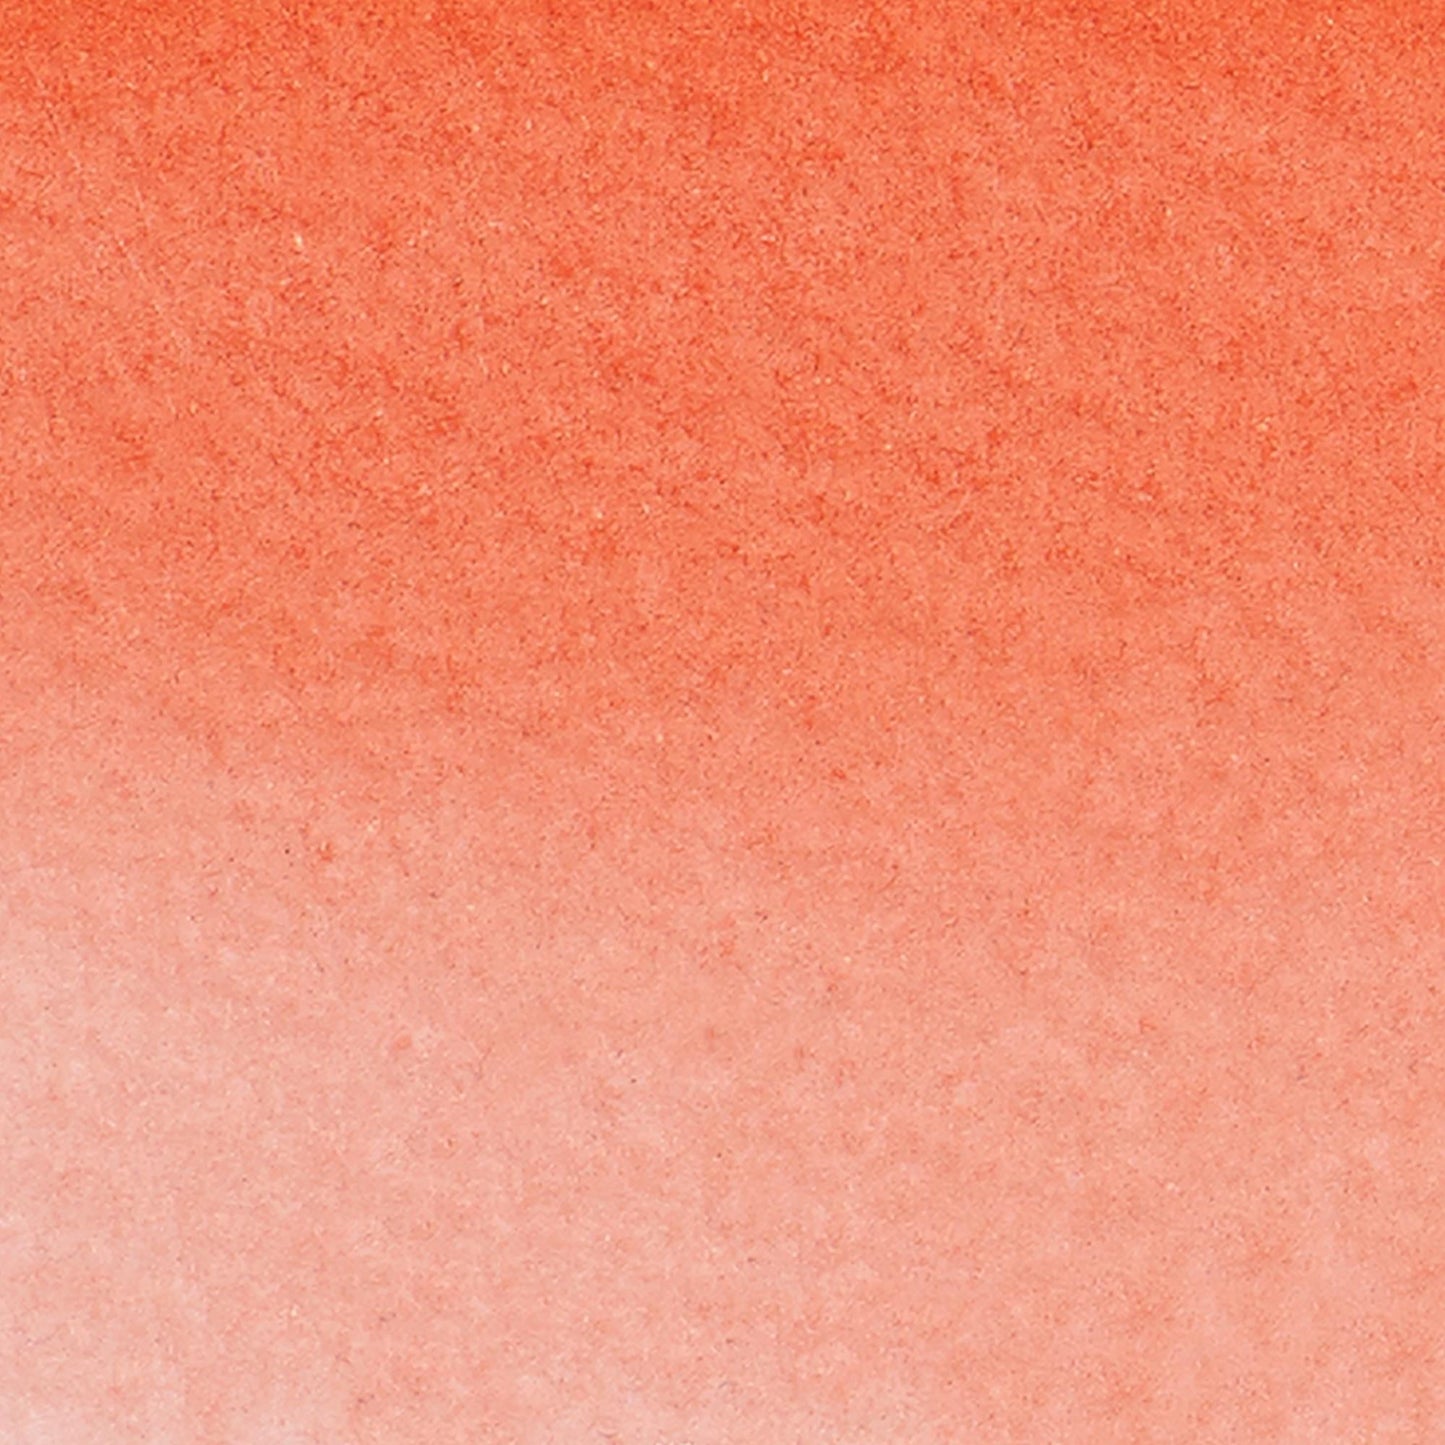 W & N Water Colour Marker Cadmium Red Hue - theartshop.com.au